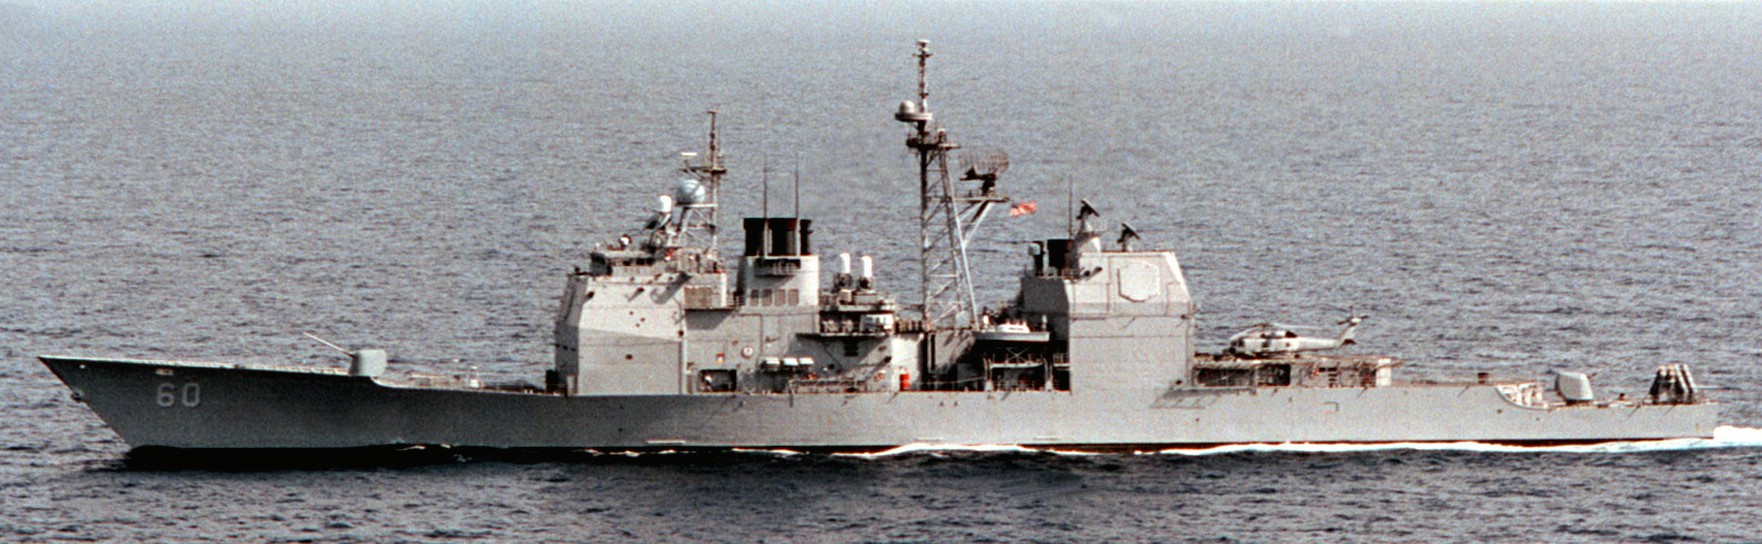 cg-60 uss normandy ticonderoga class guided missile cruiser aegis us navy 138